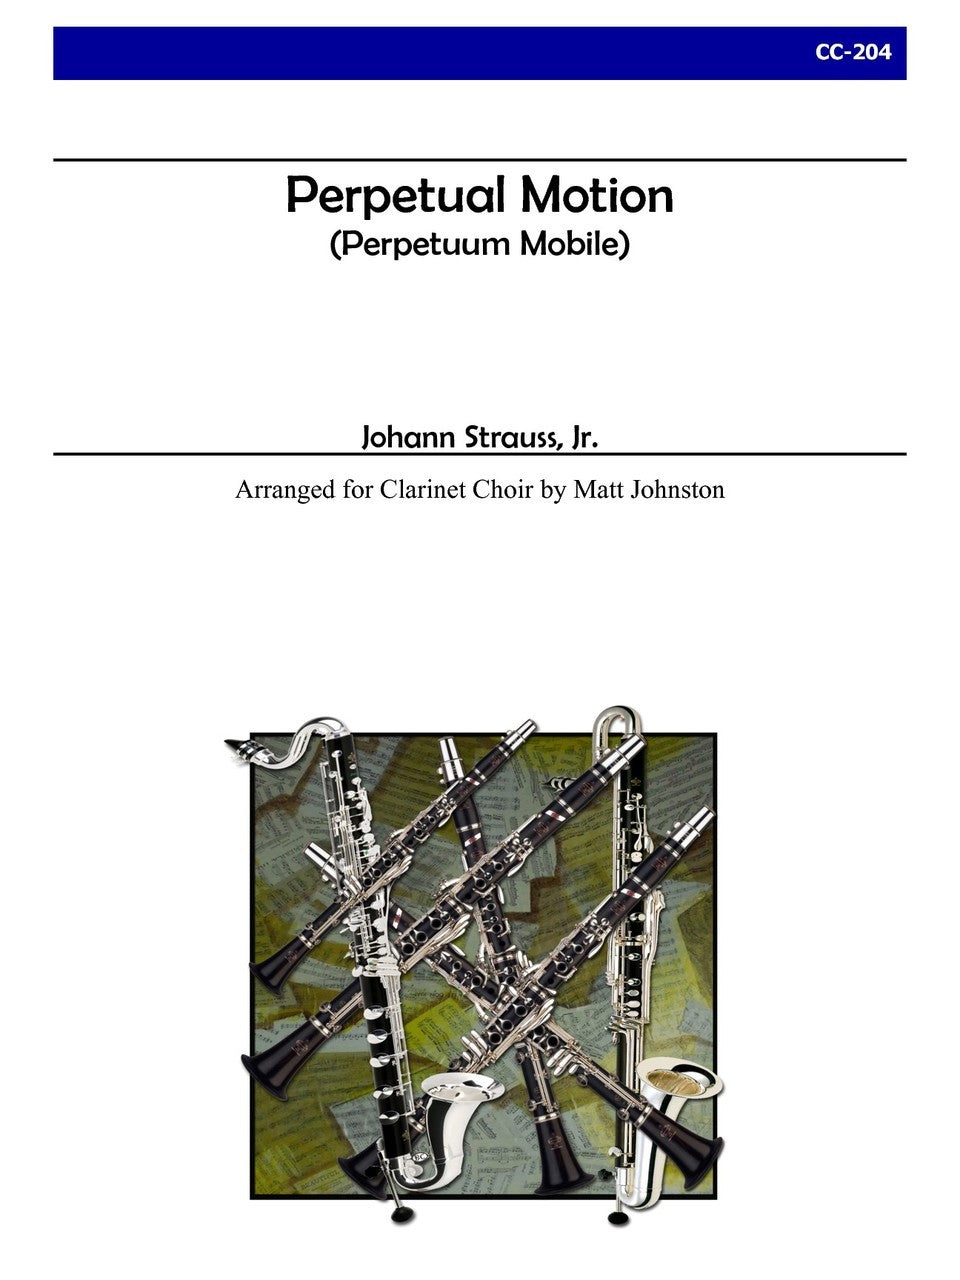 Strauss Jr. (arr. Matt Johnston) - Perpetual Motion for Clarinet Choir